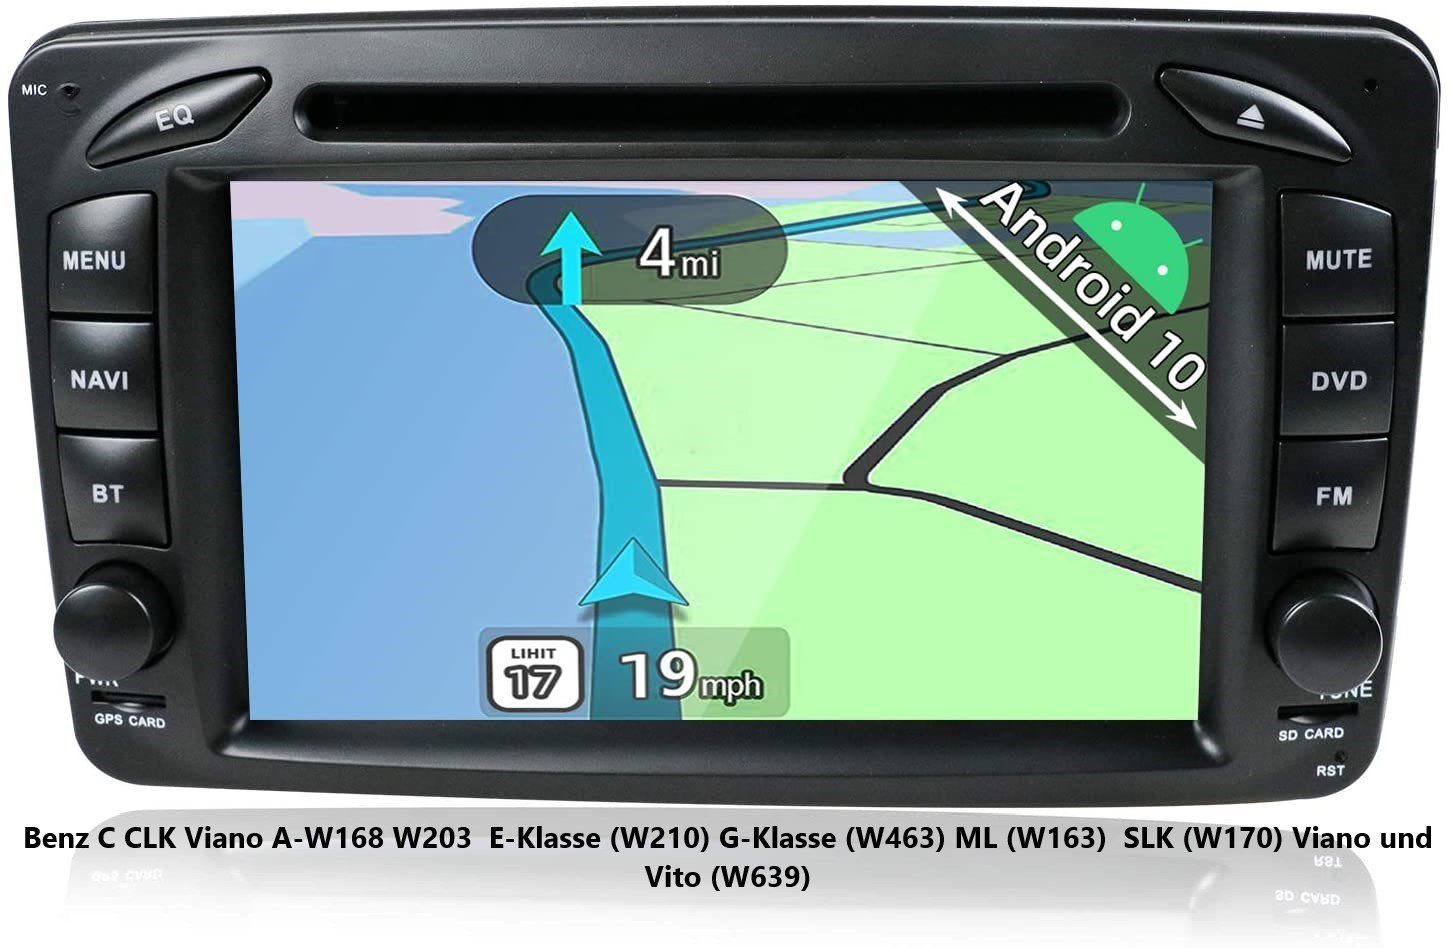 GABITECH Android Autoradio GPS Navi für Mercedes Benz C CLK Viano A-W168 W203 Autoradio